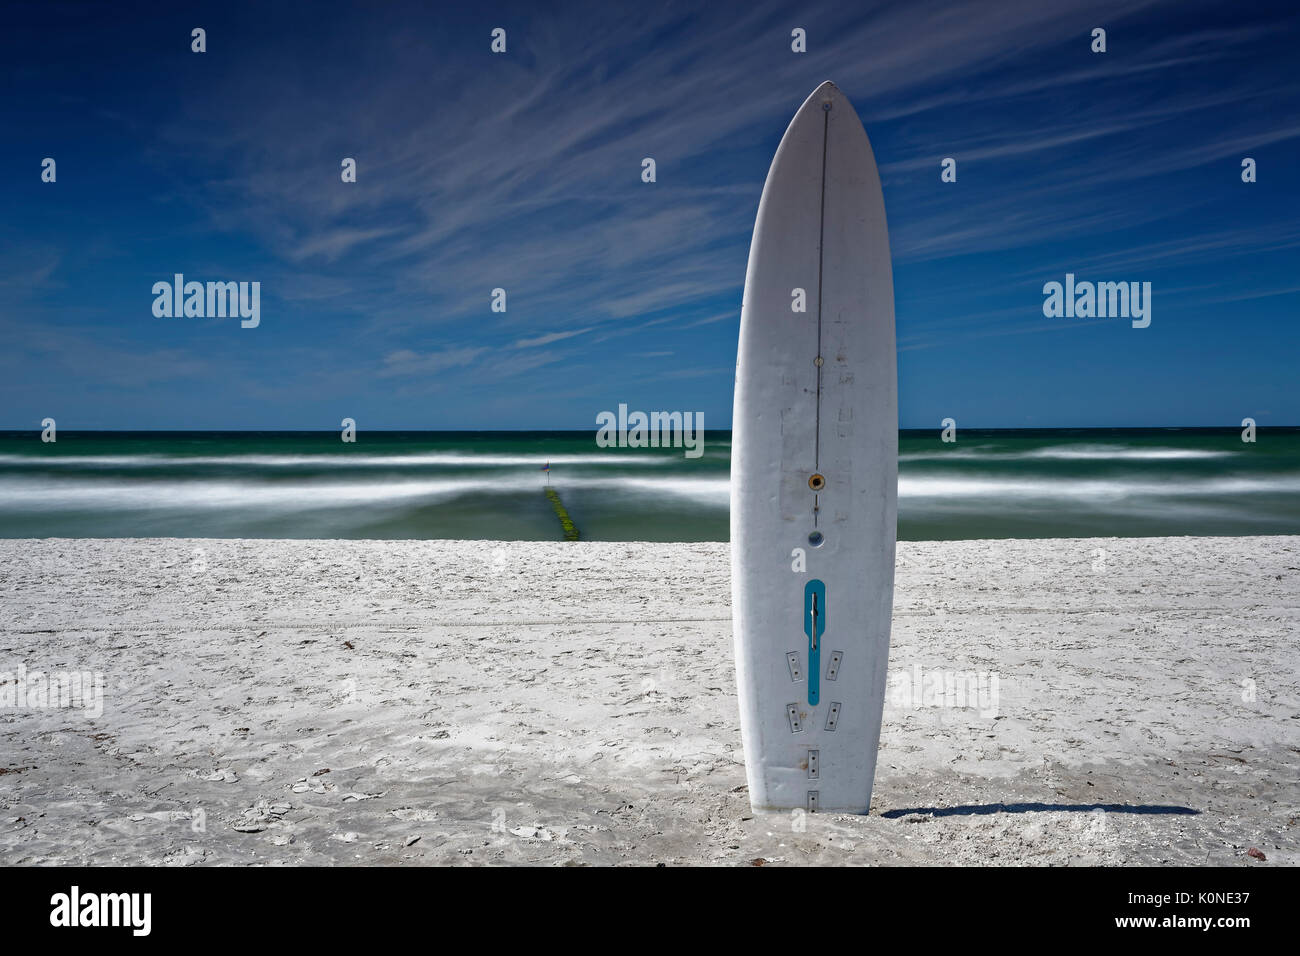 Germany, Mecklenburg-Western Pomerania, Hiddensee, Surfboard on the beach Stock Photo